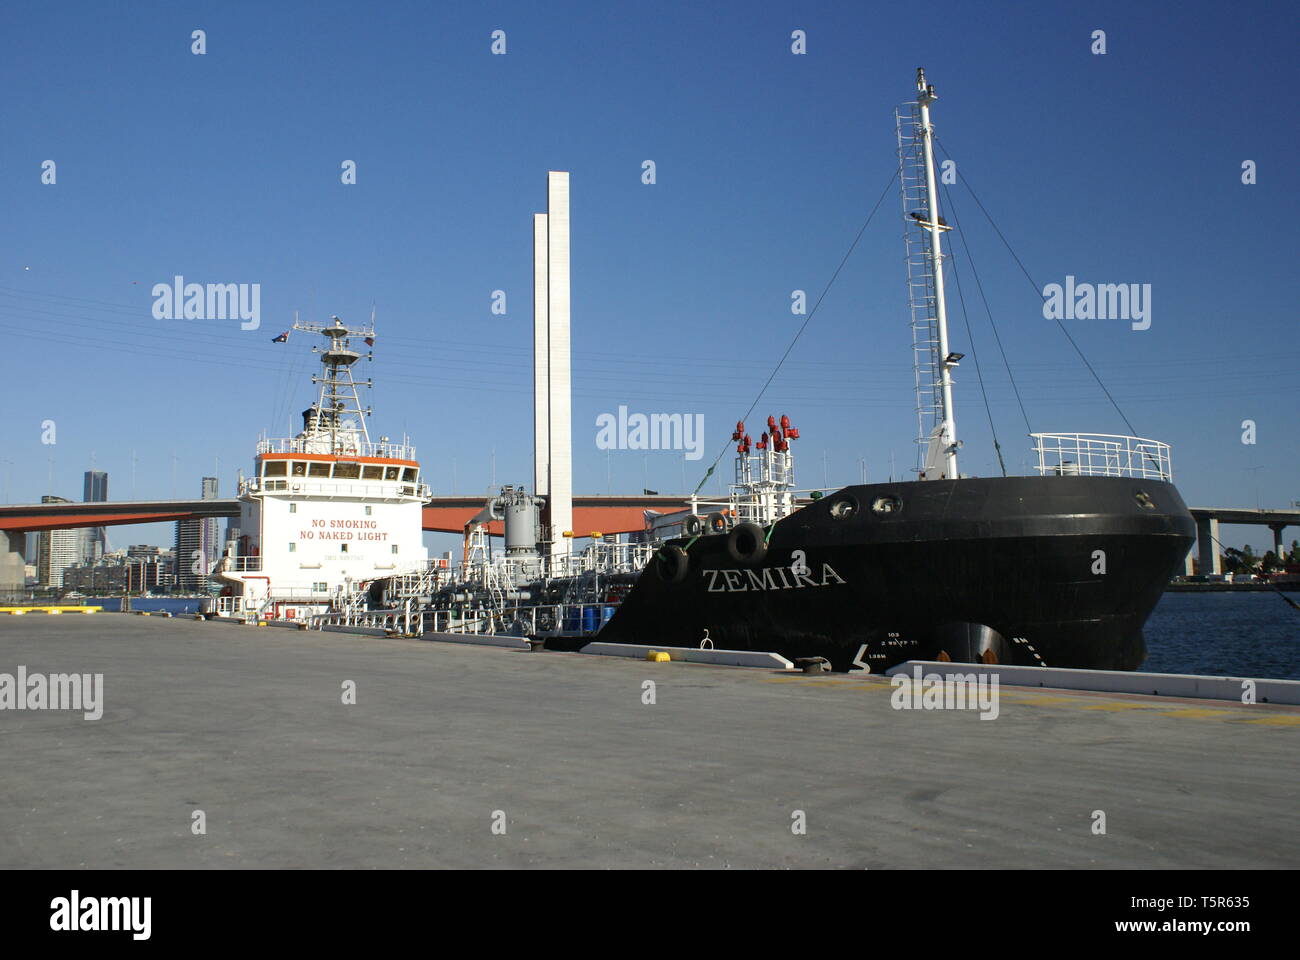 Small tanker Zemira in the port of Melbourne. Australia. Stock Photo